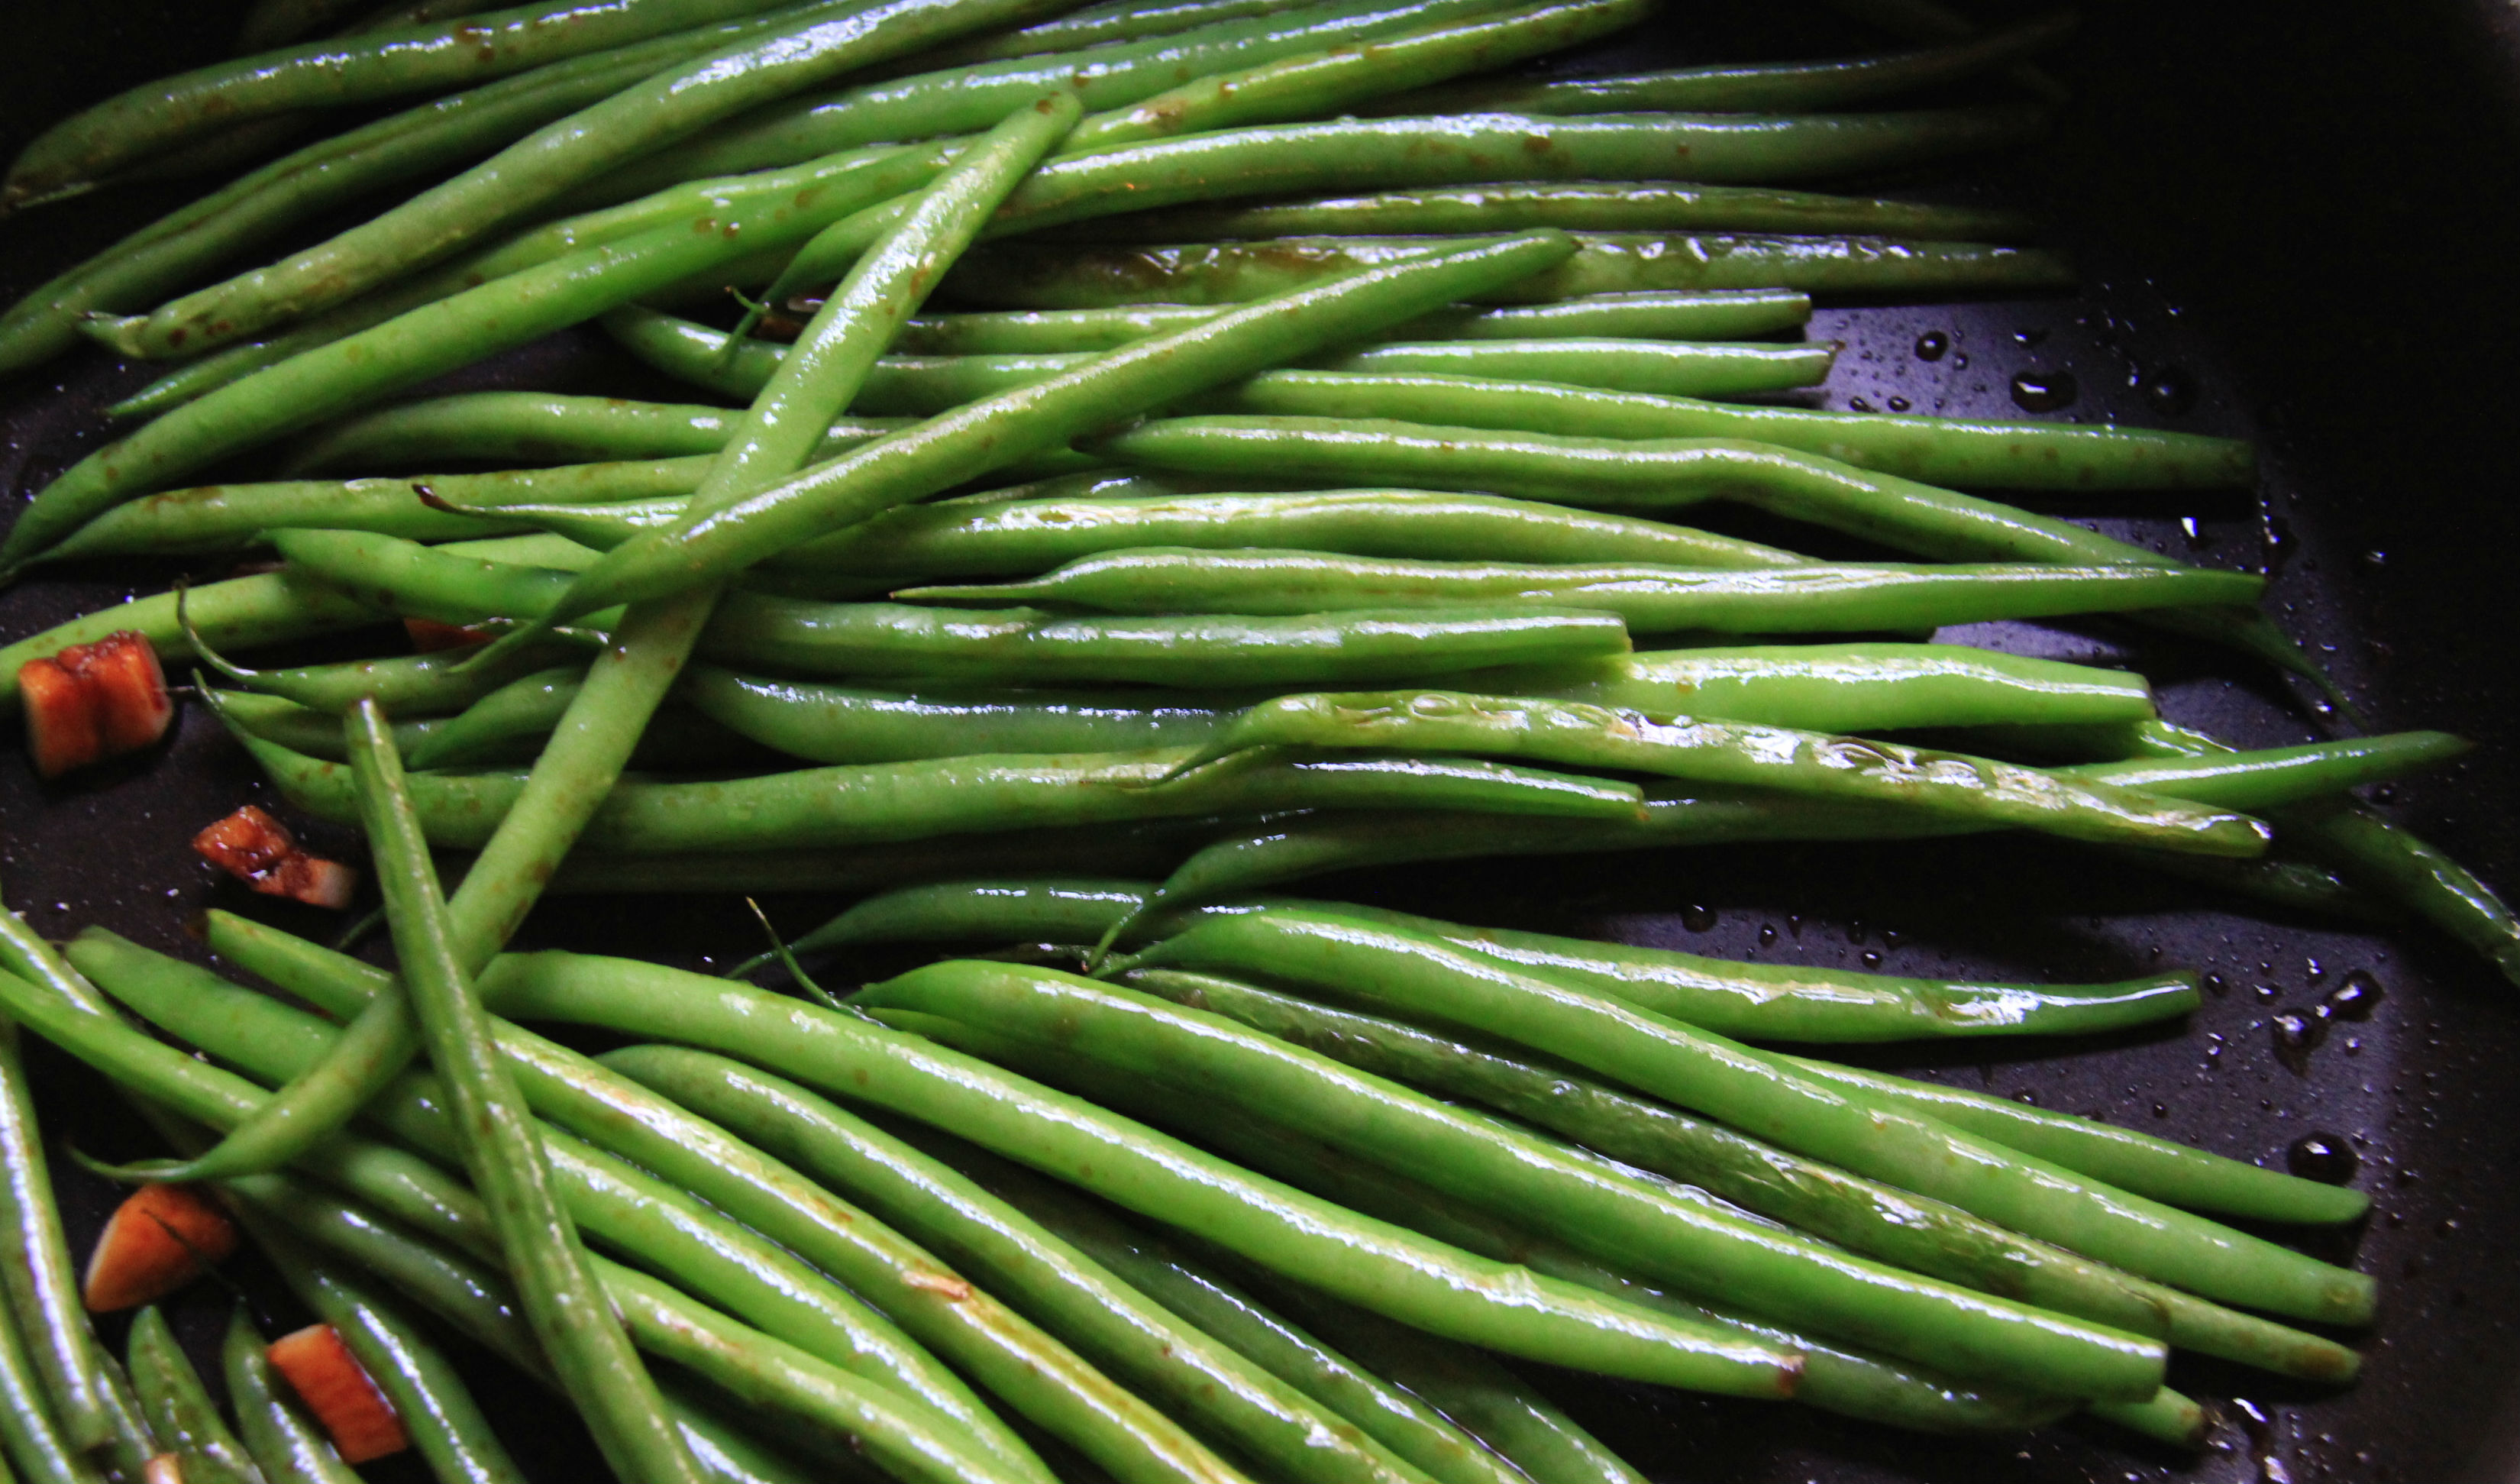 Garlicky Green Beans